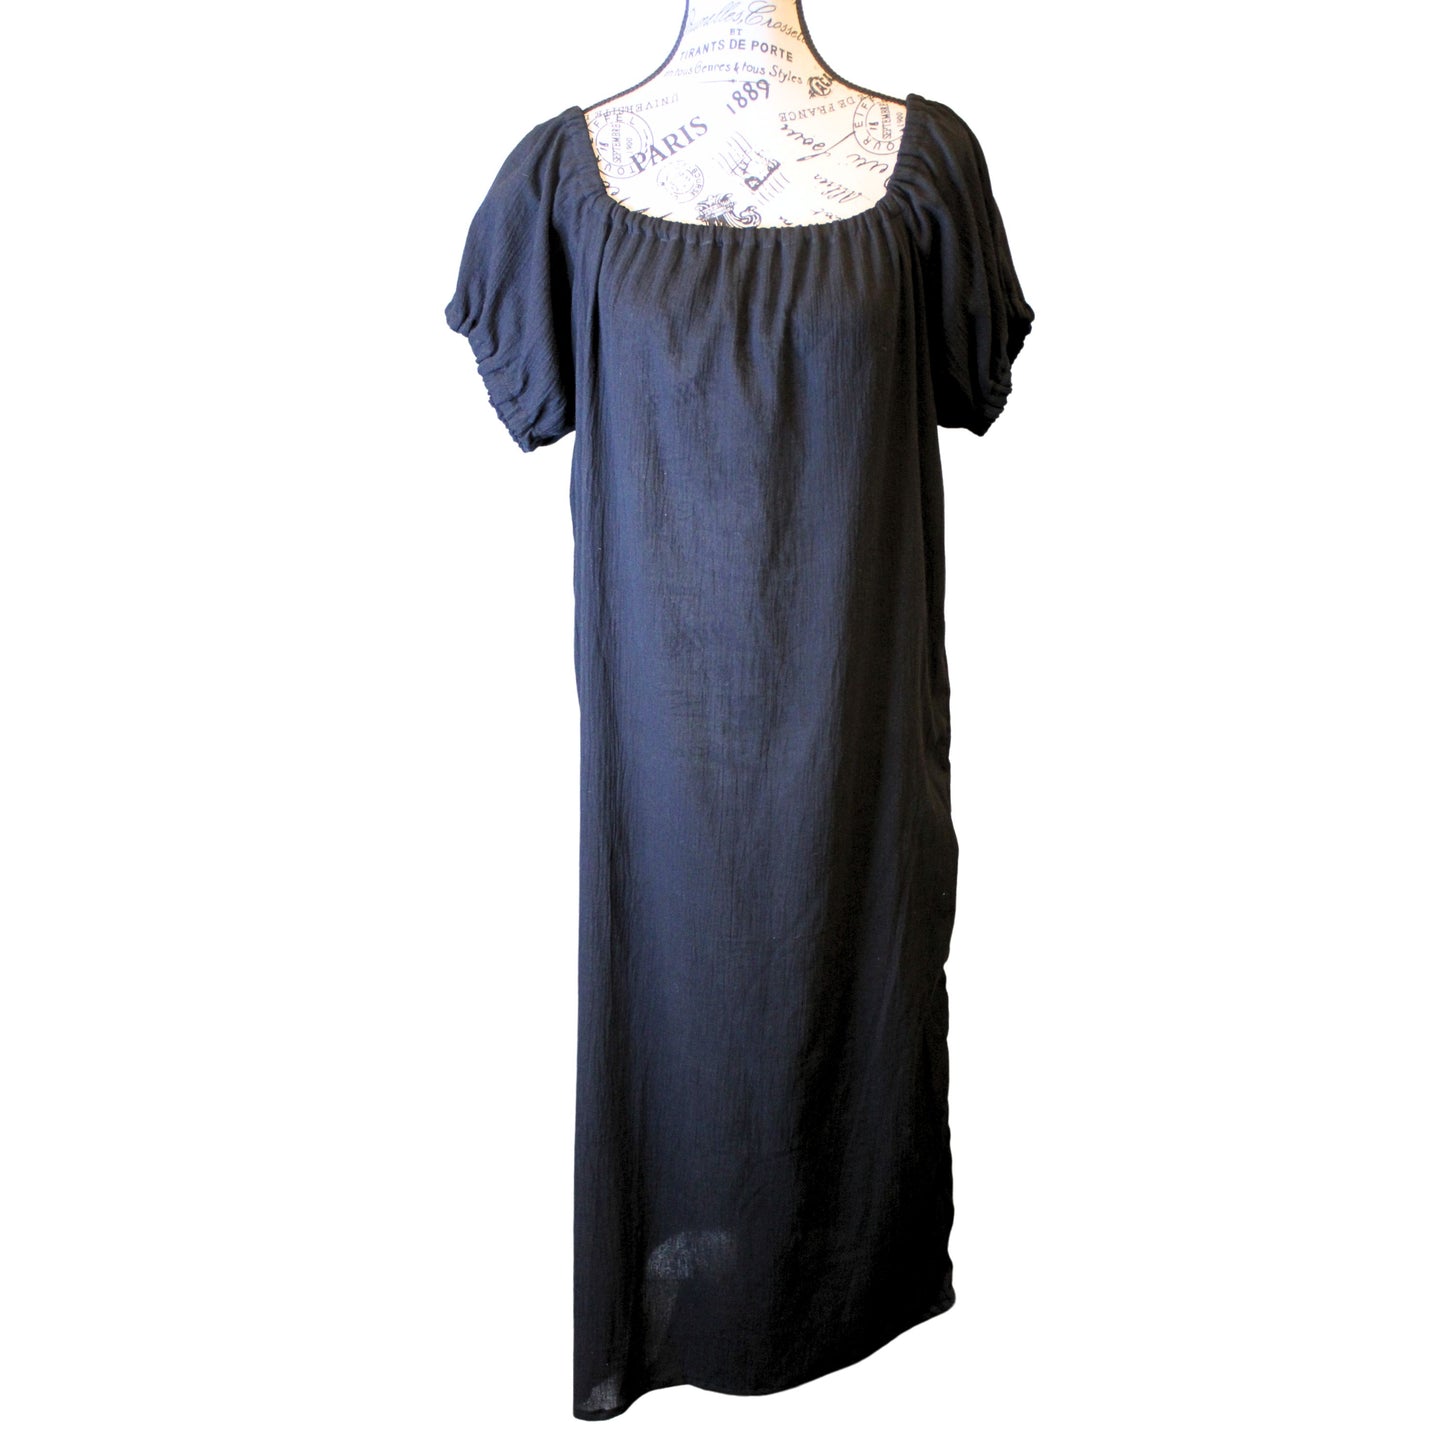 The VM Long Peasant Dress